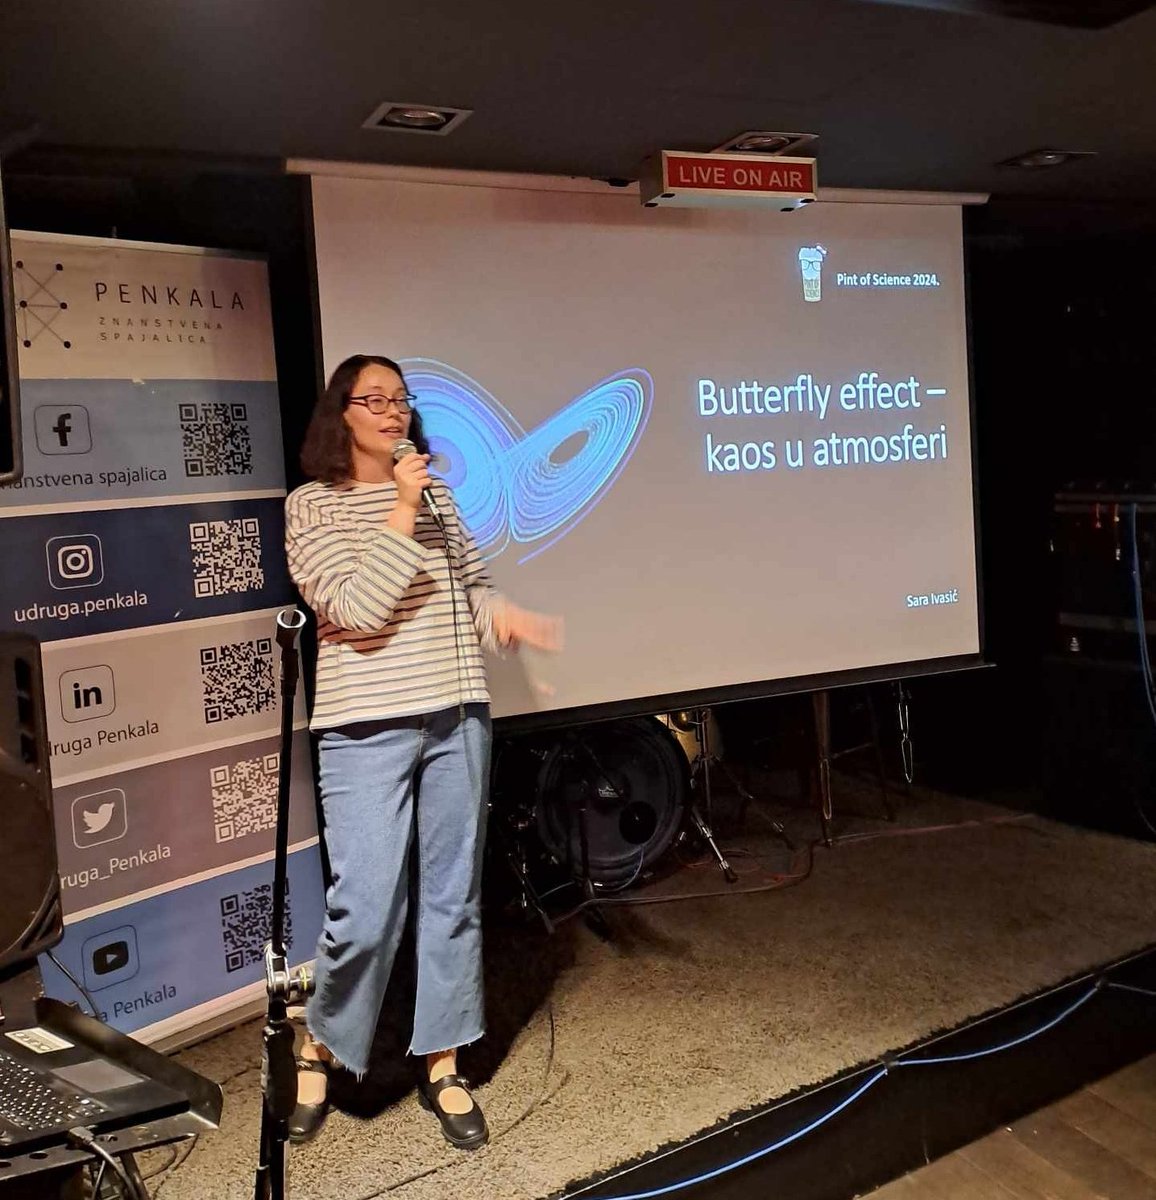 Pint of Science po prvi puta u Zagrebu! @meteolist nam priča o 'Butterfly effect'!
#pint24 #pintHR @pintsworld #research #scicomm #researchers #science #zagreb @udruga_penkala